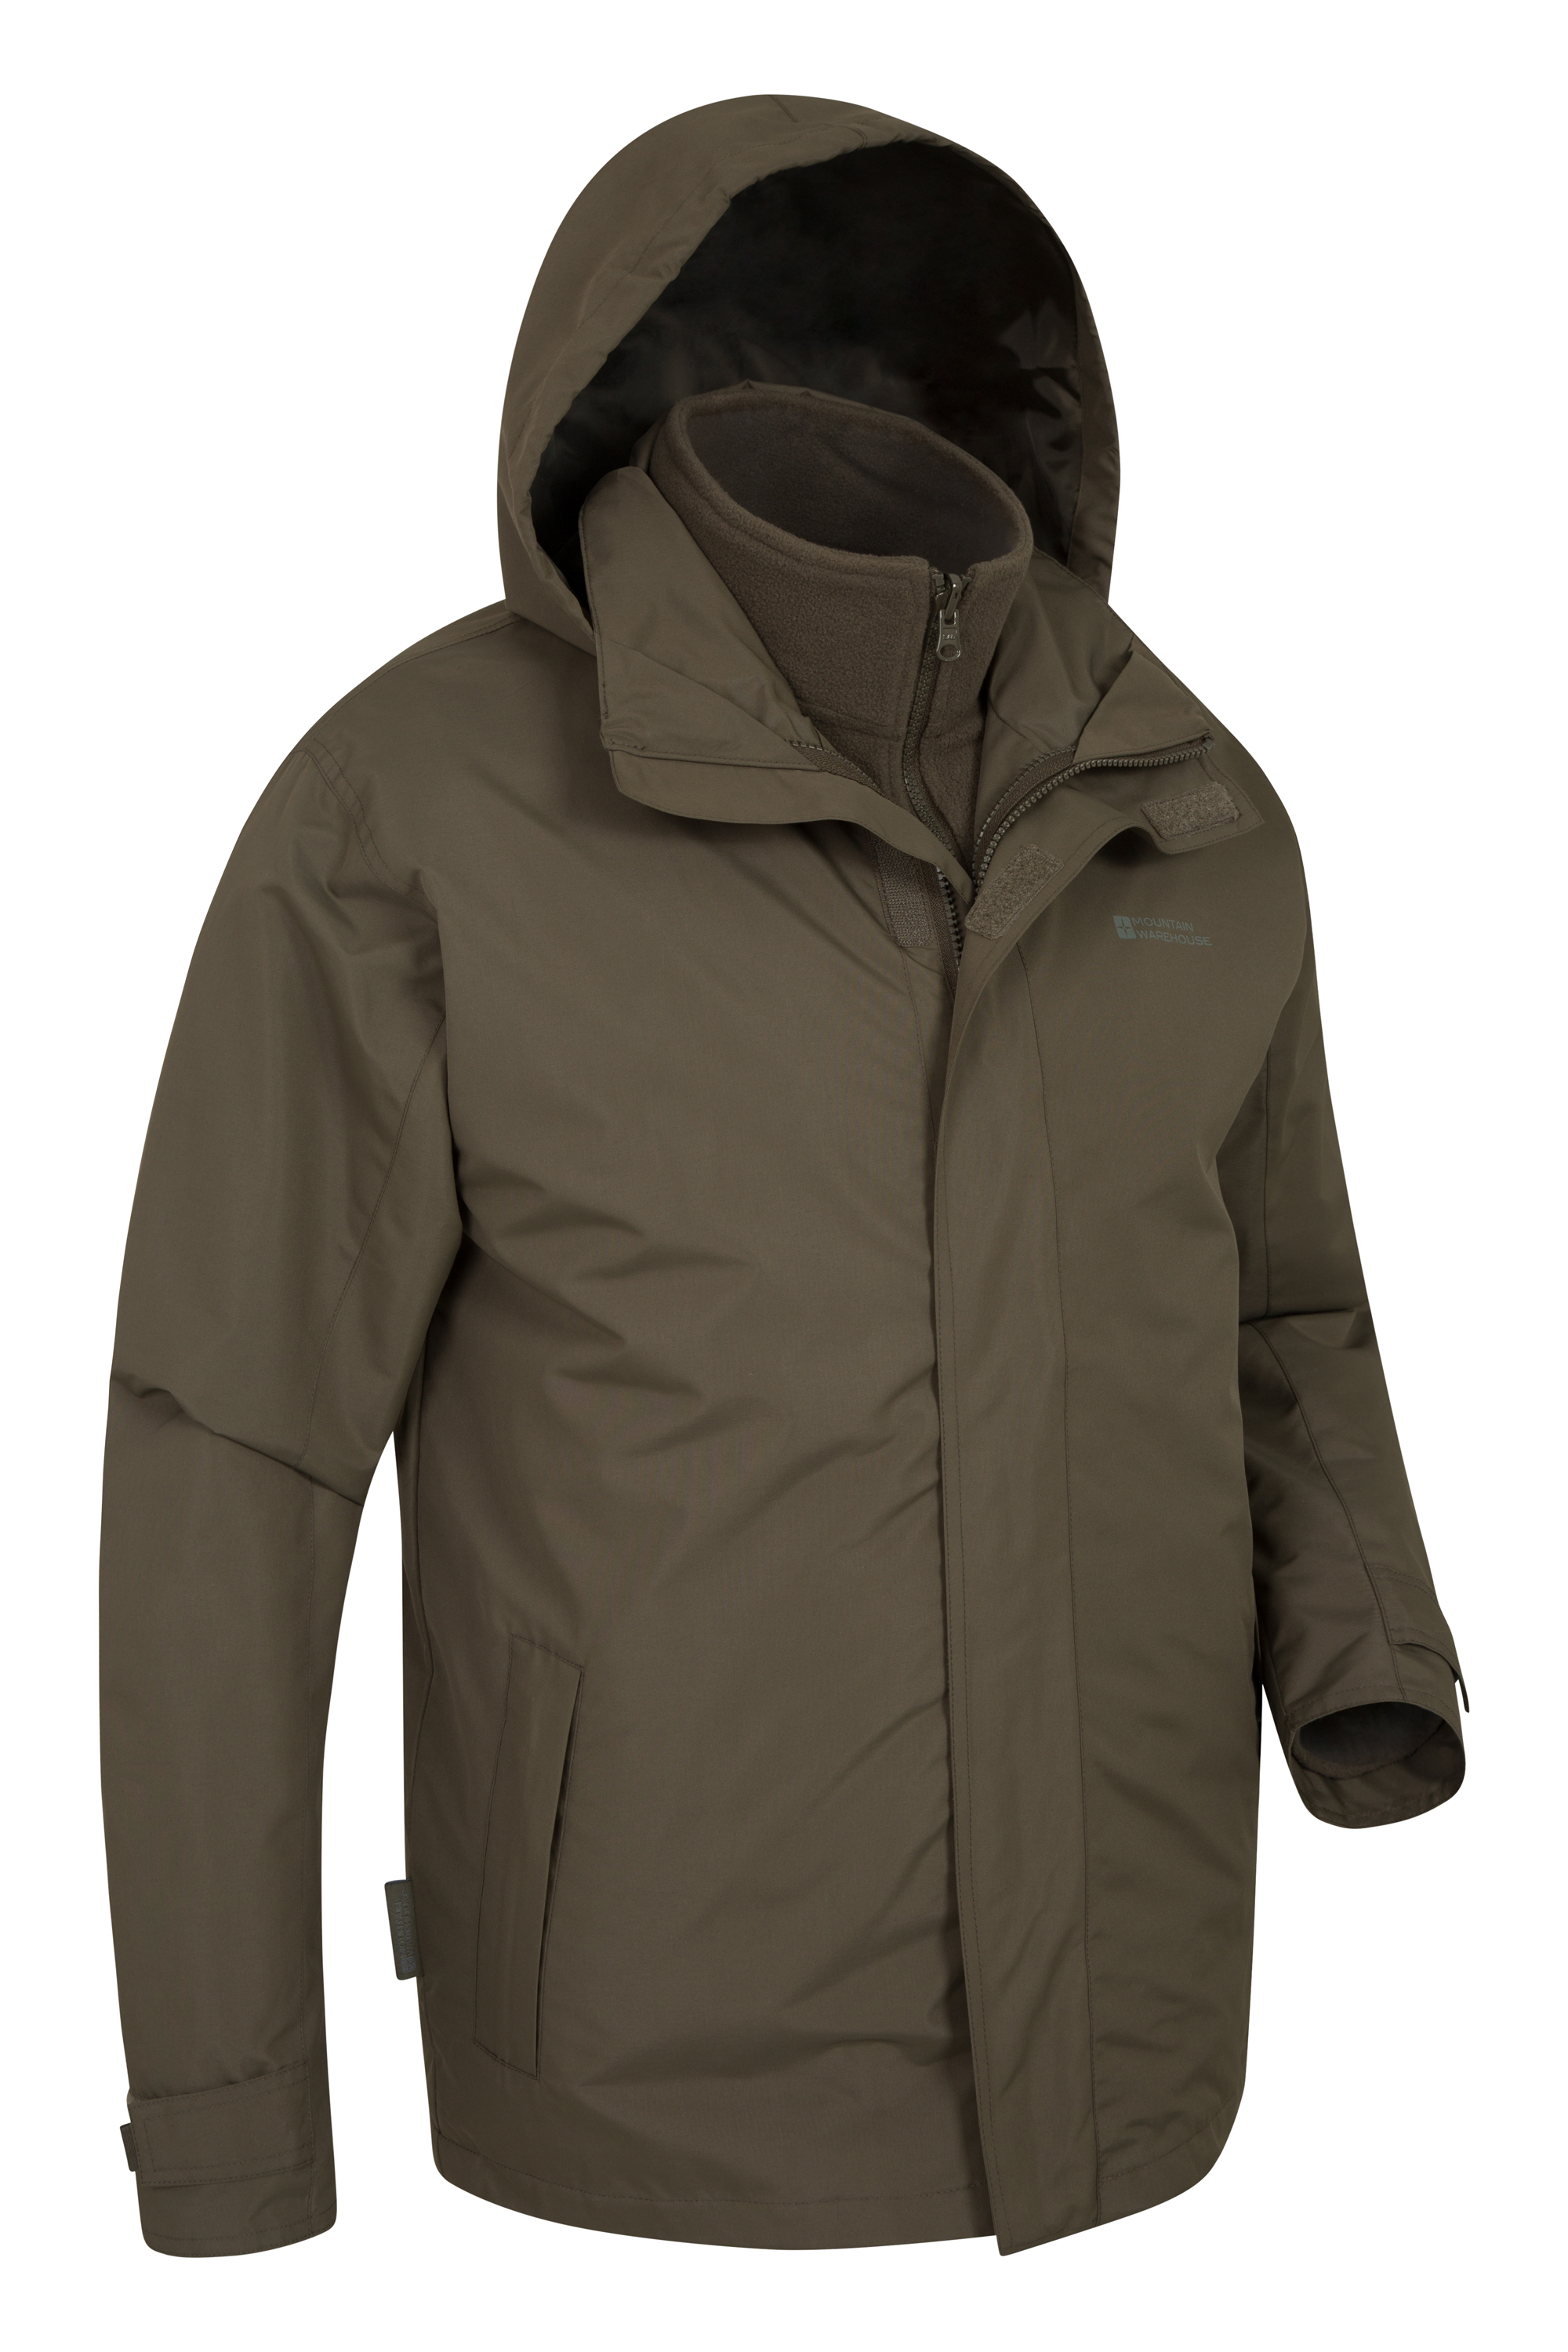 waterproof coats mens waterproof jackets | mountain warehouse us EFXPCZO